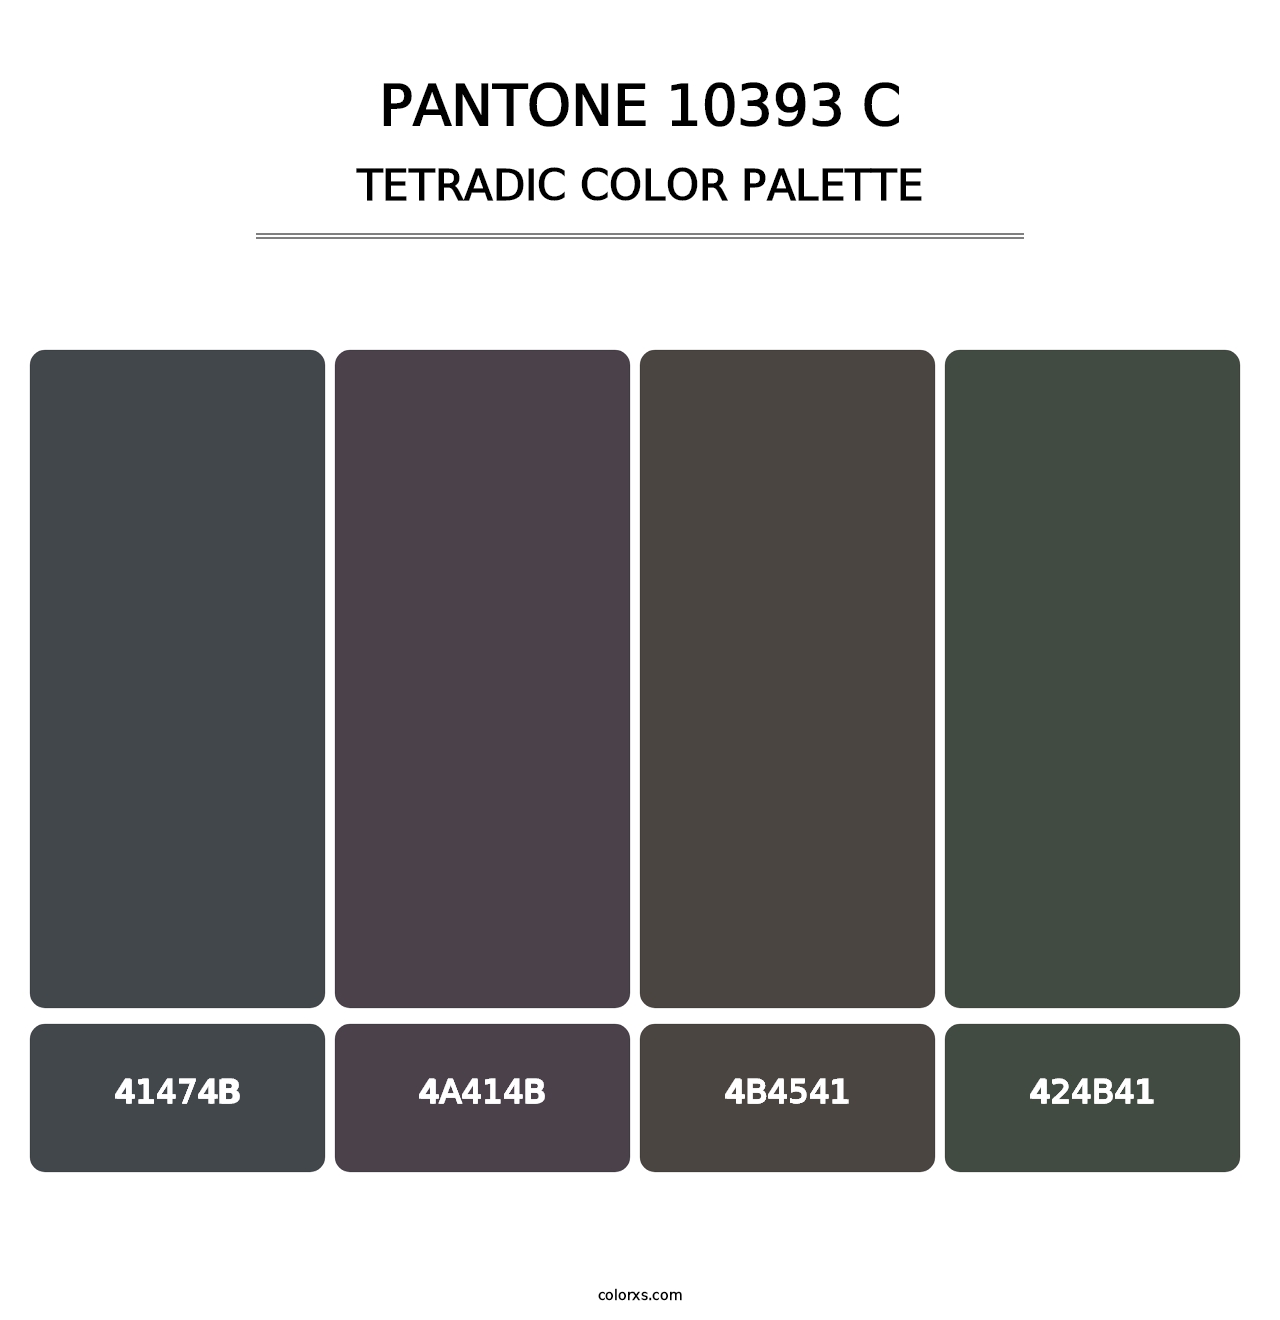 PANTONE 10393 C - Tetradic Color Palette